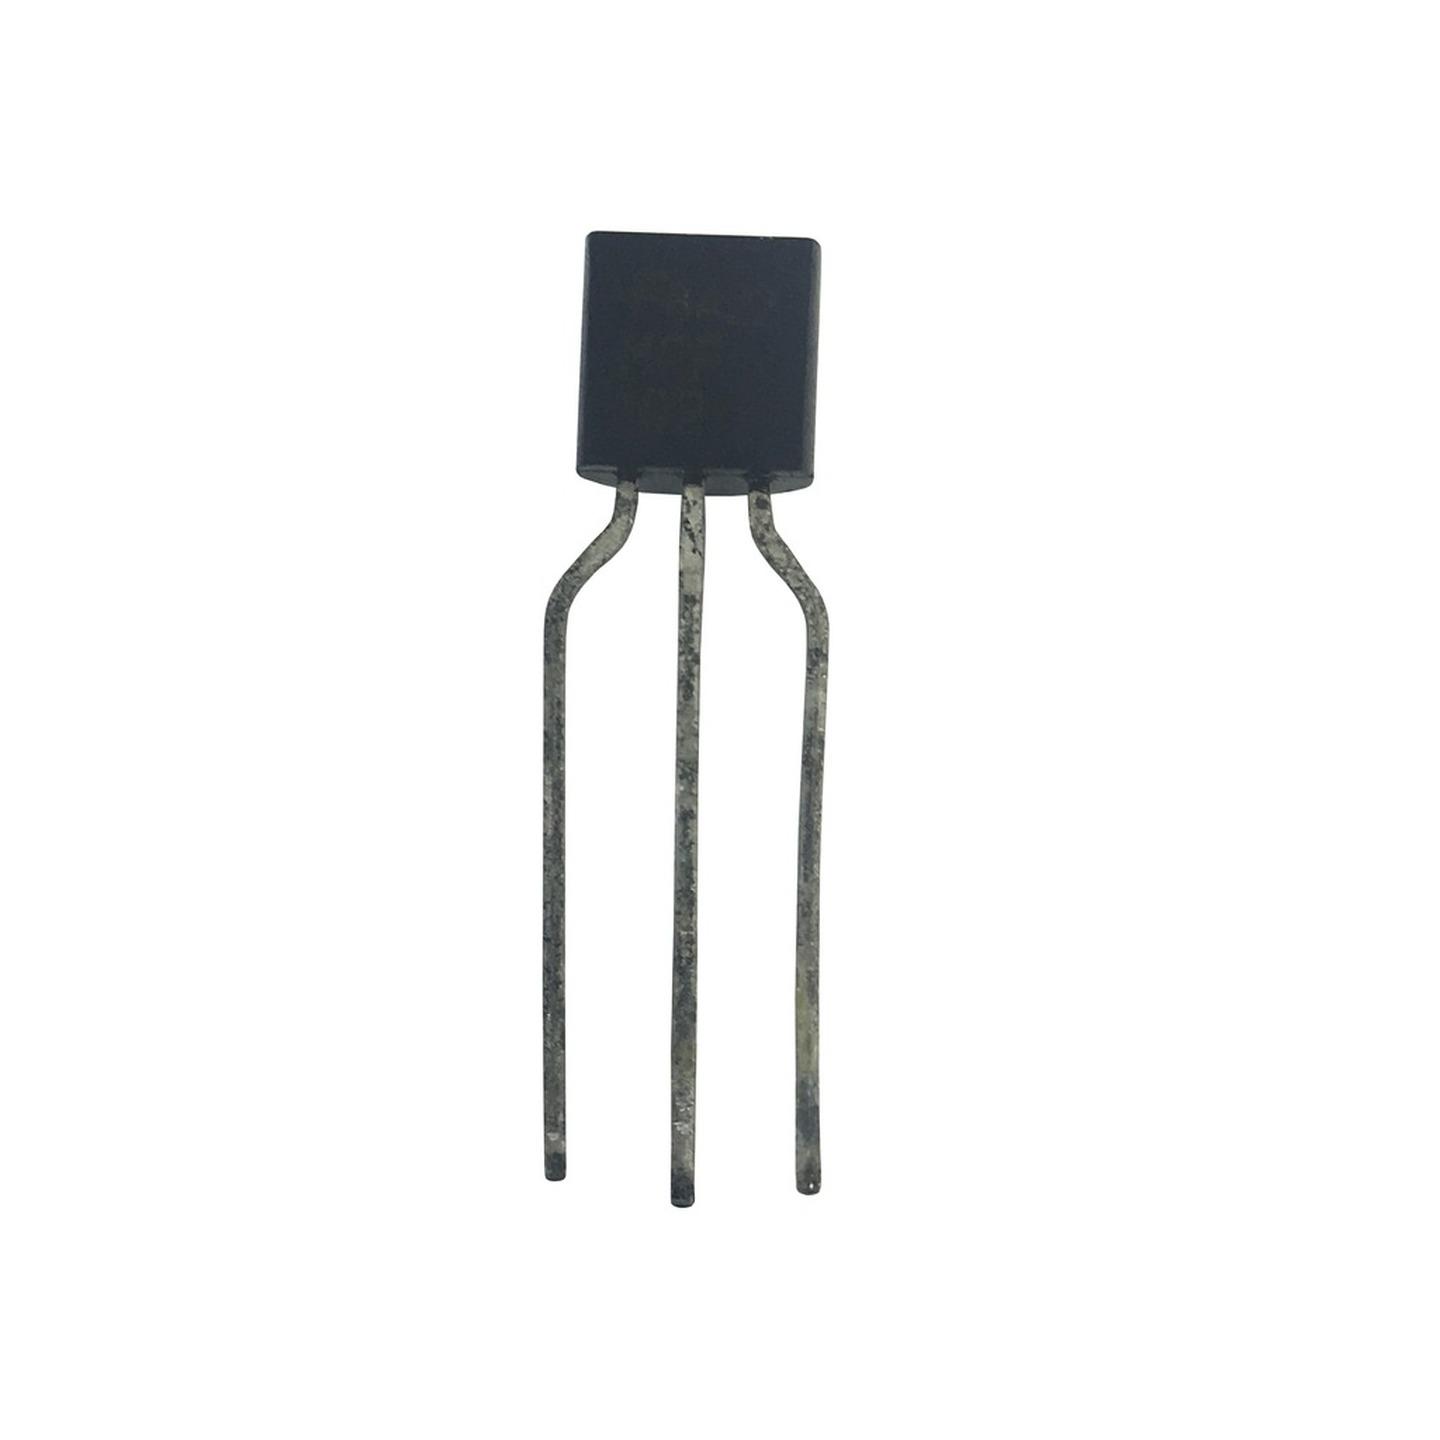 LM335Z Temperature Sensor Linear IC